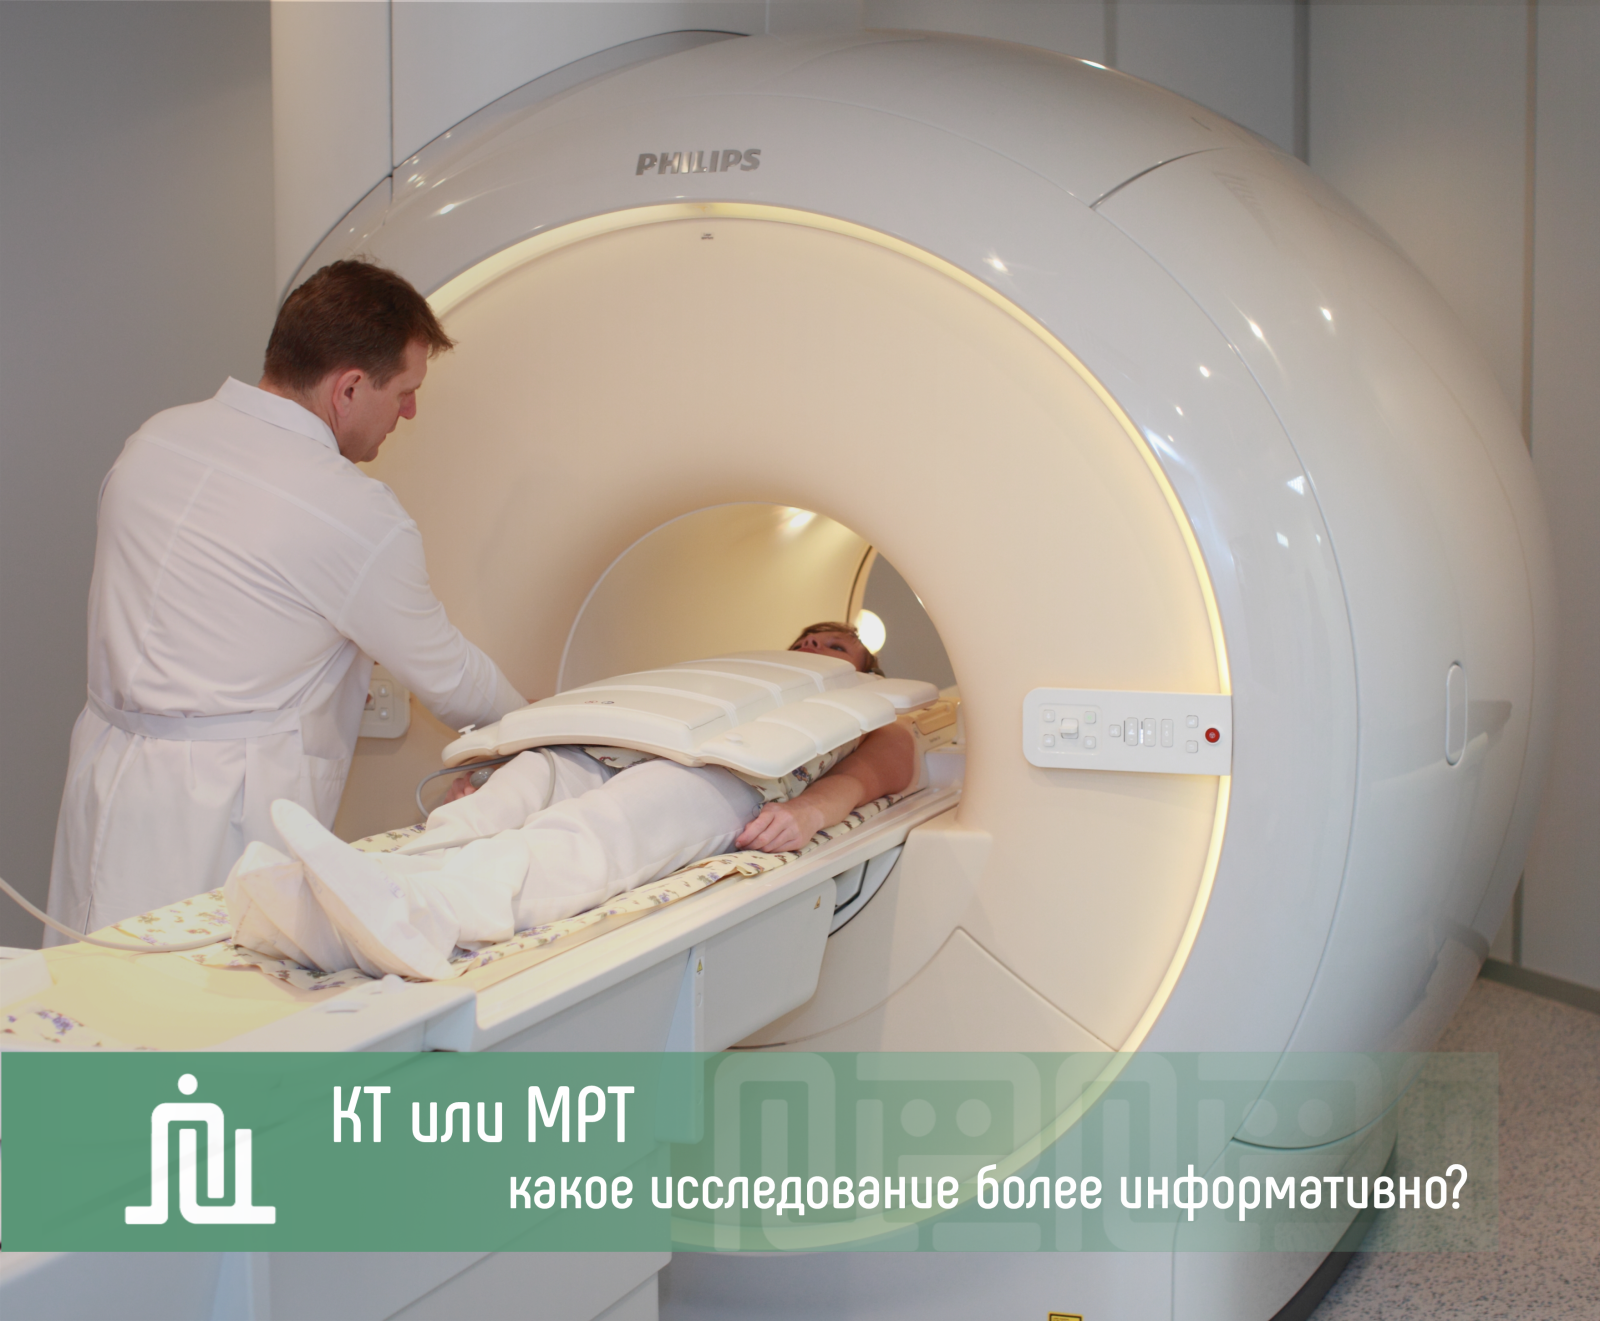 КТ или МРТ какой метод исследований наиболее информативен?